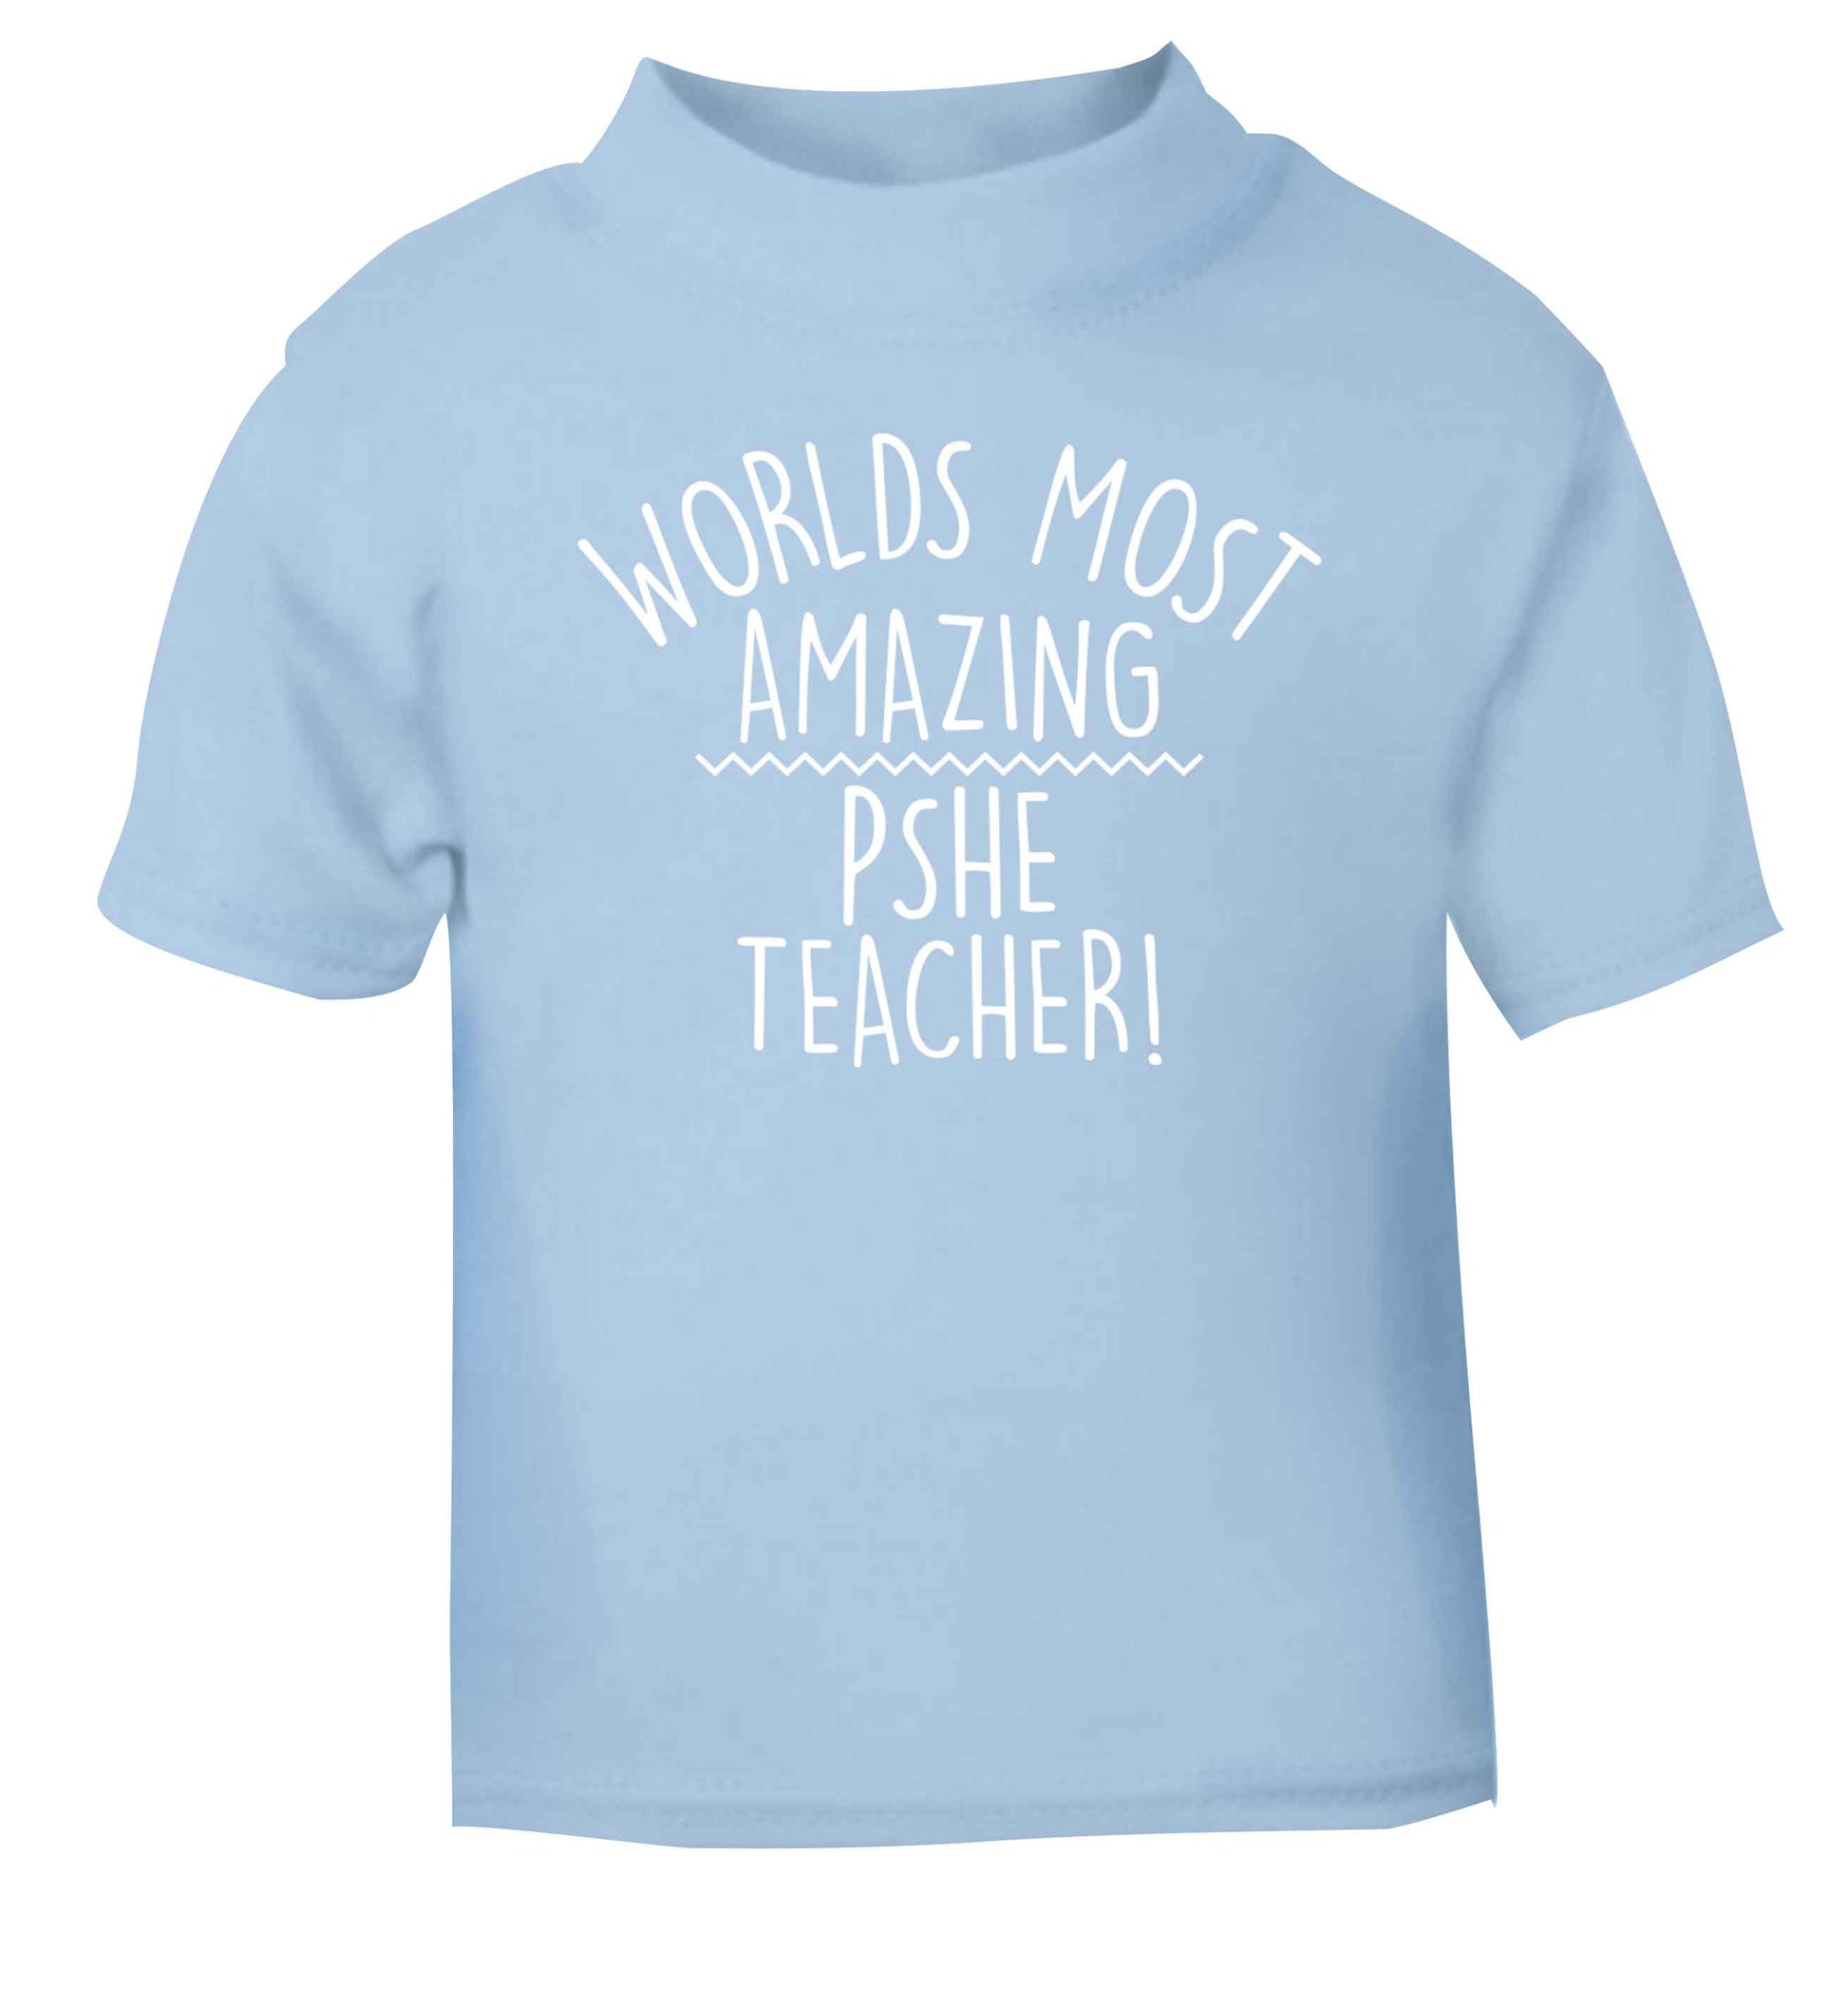 Worlds most amazing PHSE teacher light blue baby toddler Tshirt 2 Years